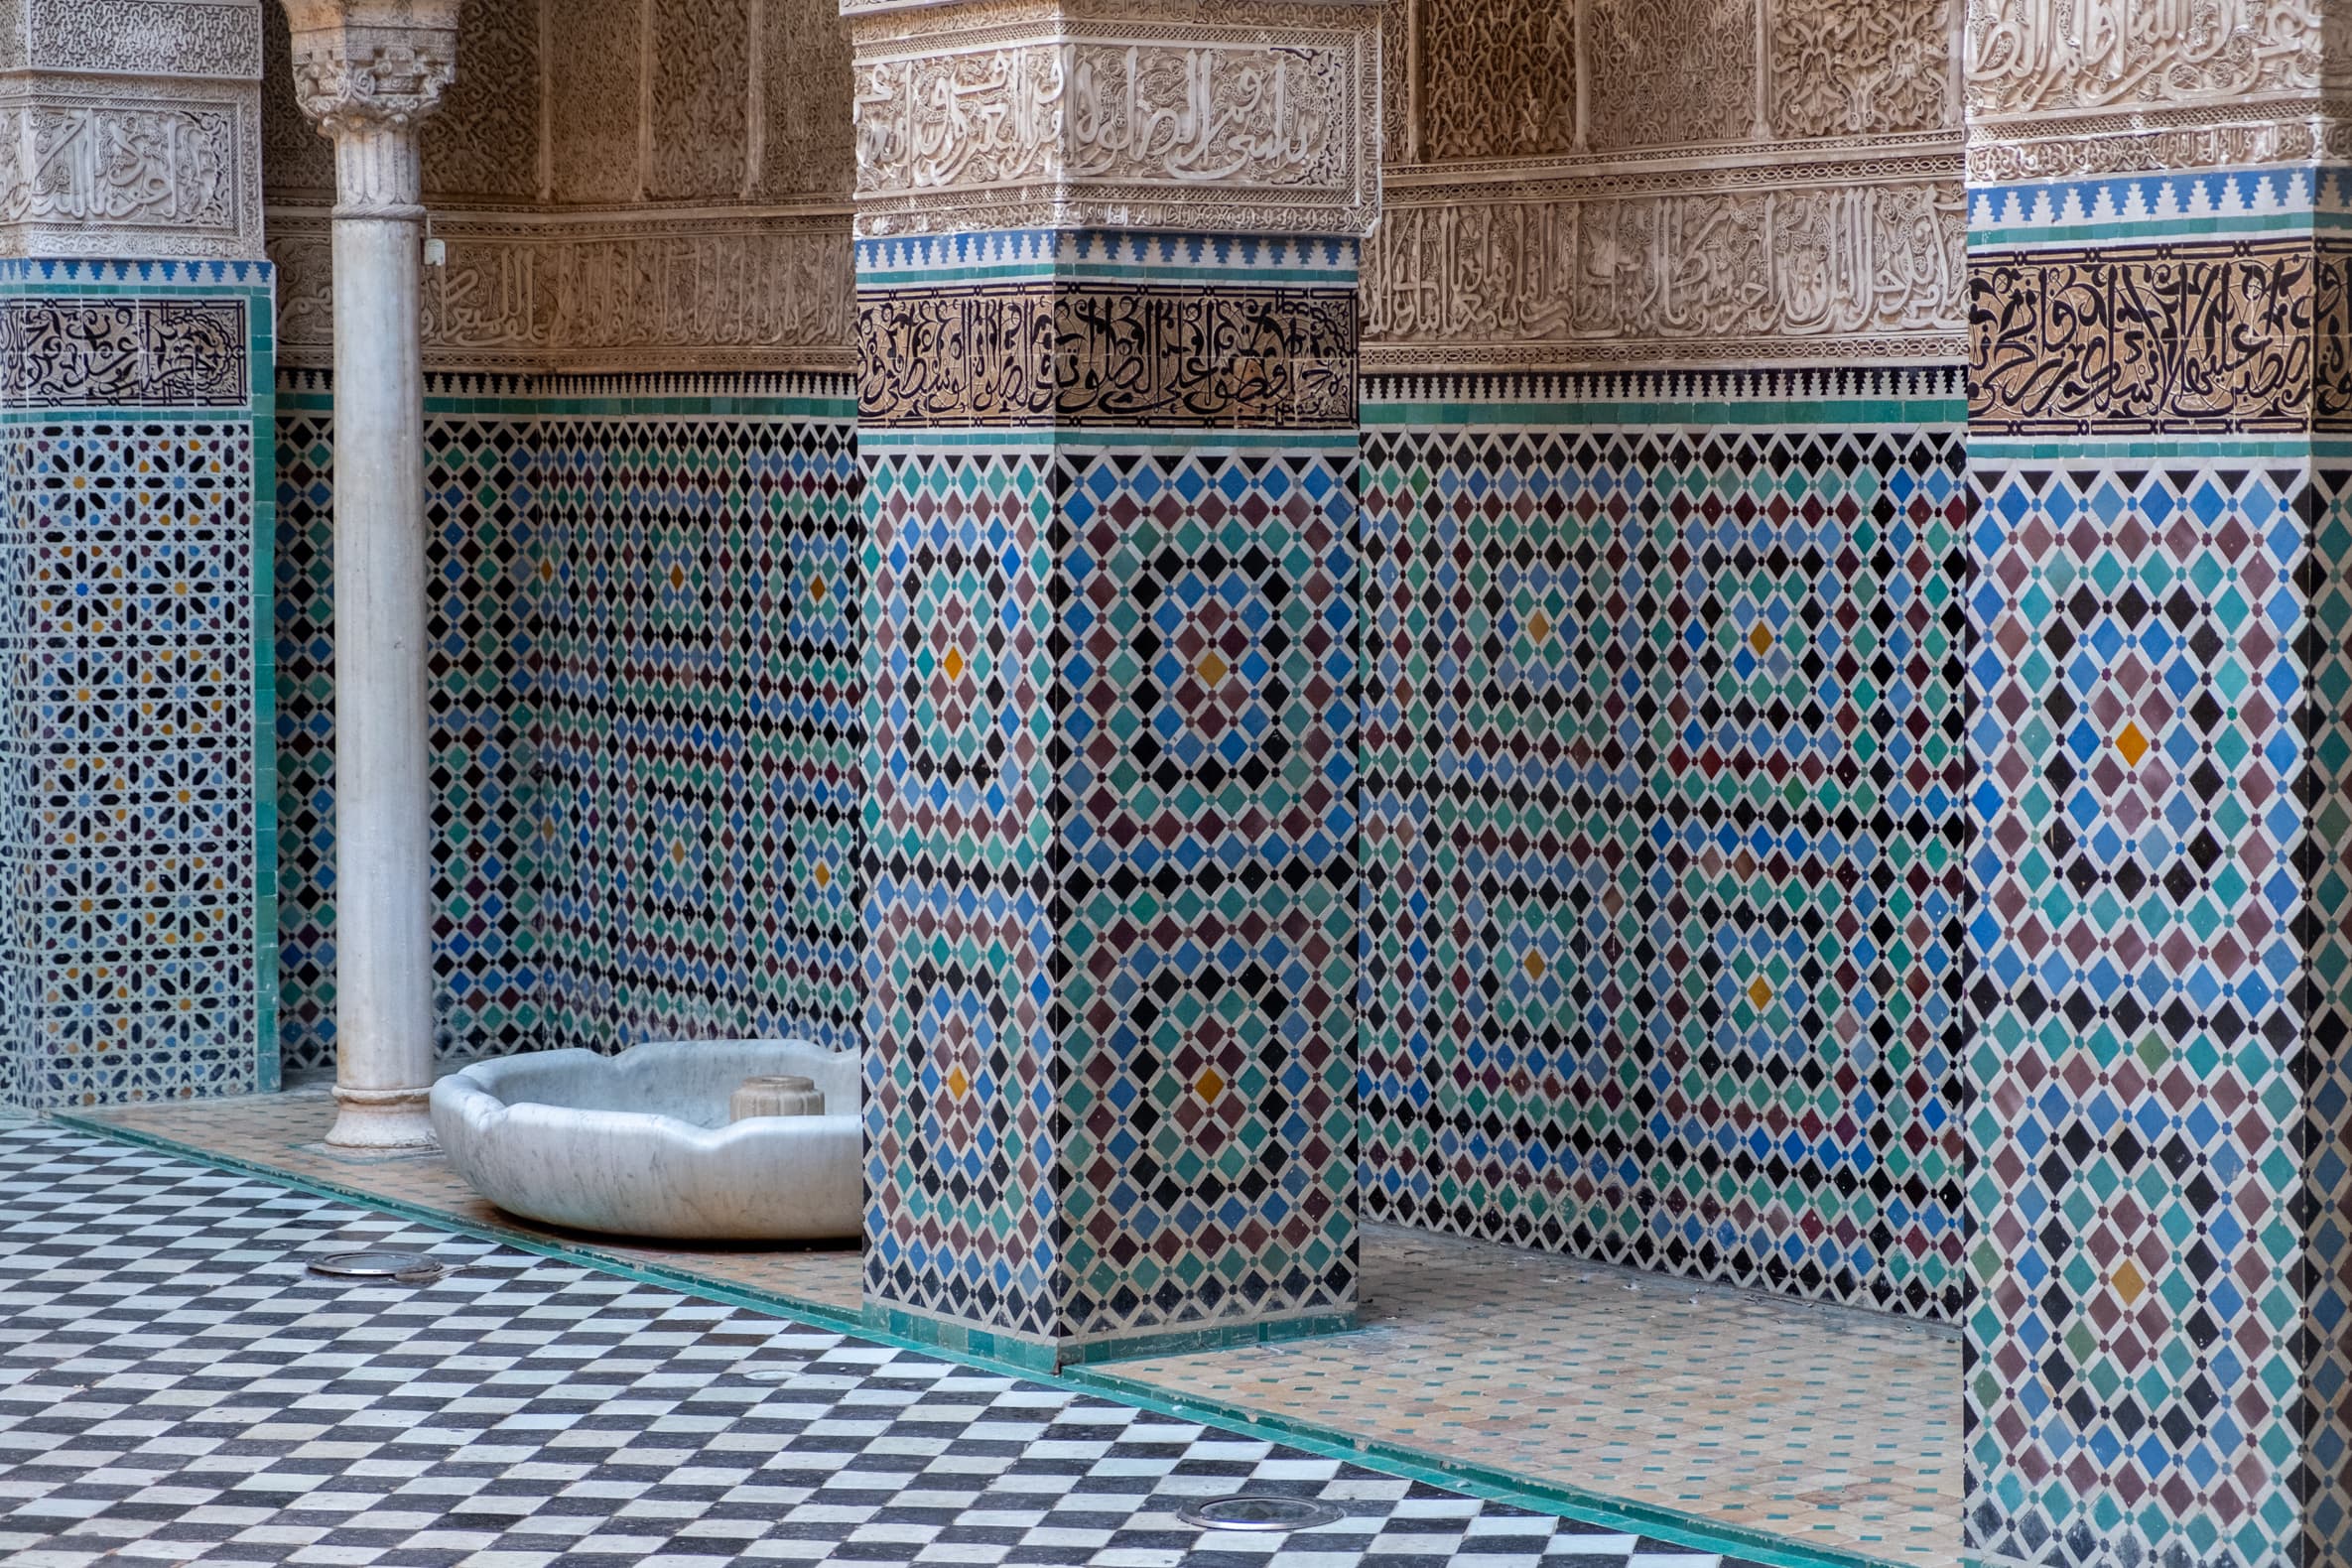 Columns and mosaics in University of al-Qarawiyyin, Fez